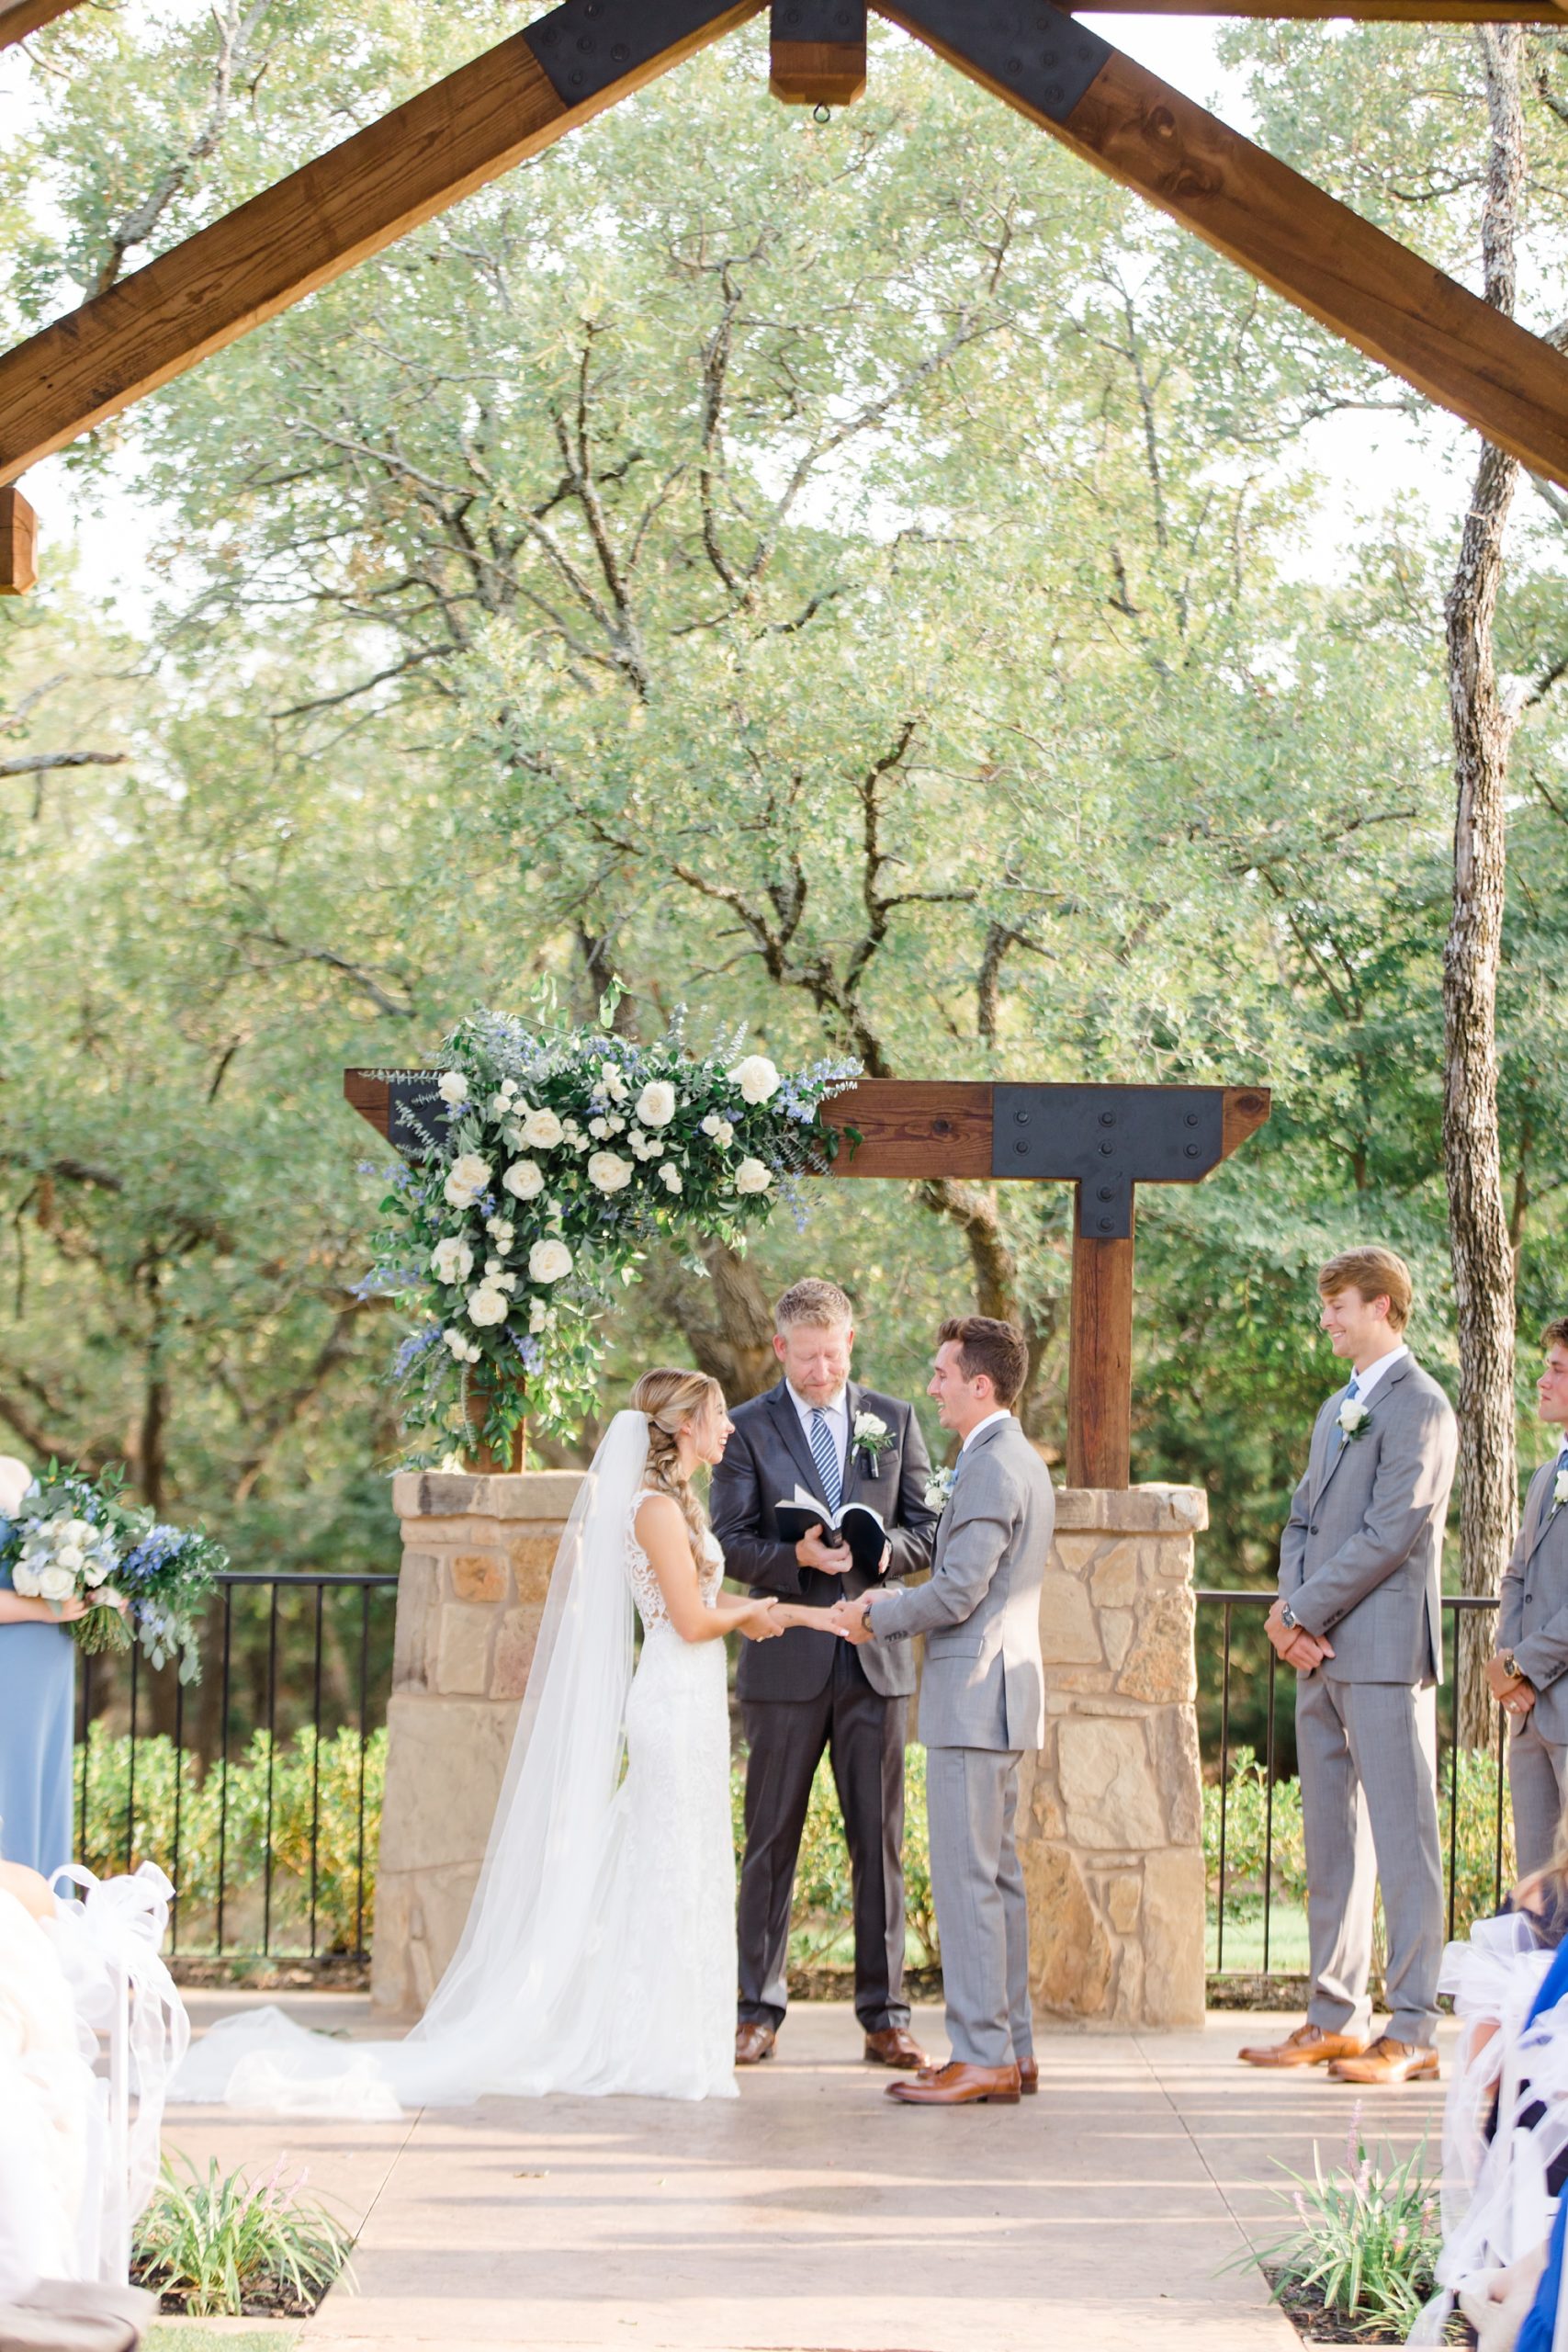 Aubrey TX wedding ceremony under arbor at The Lodge